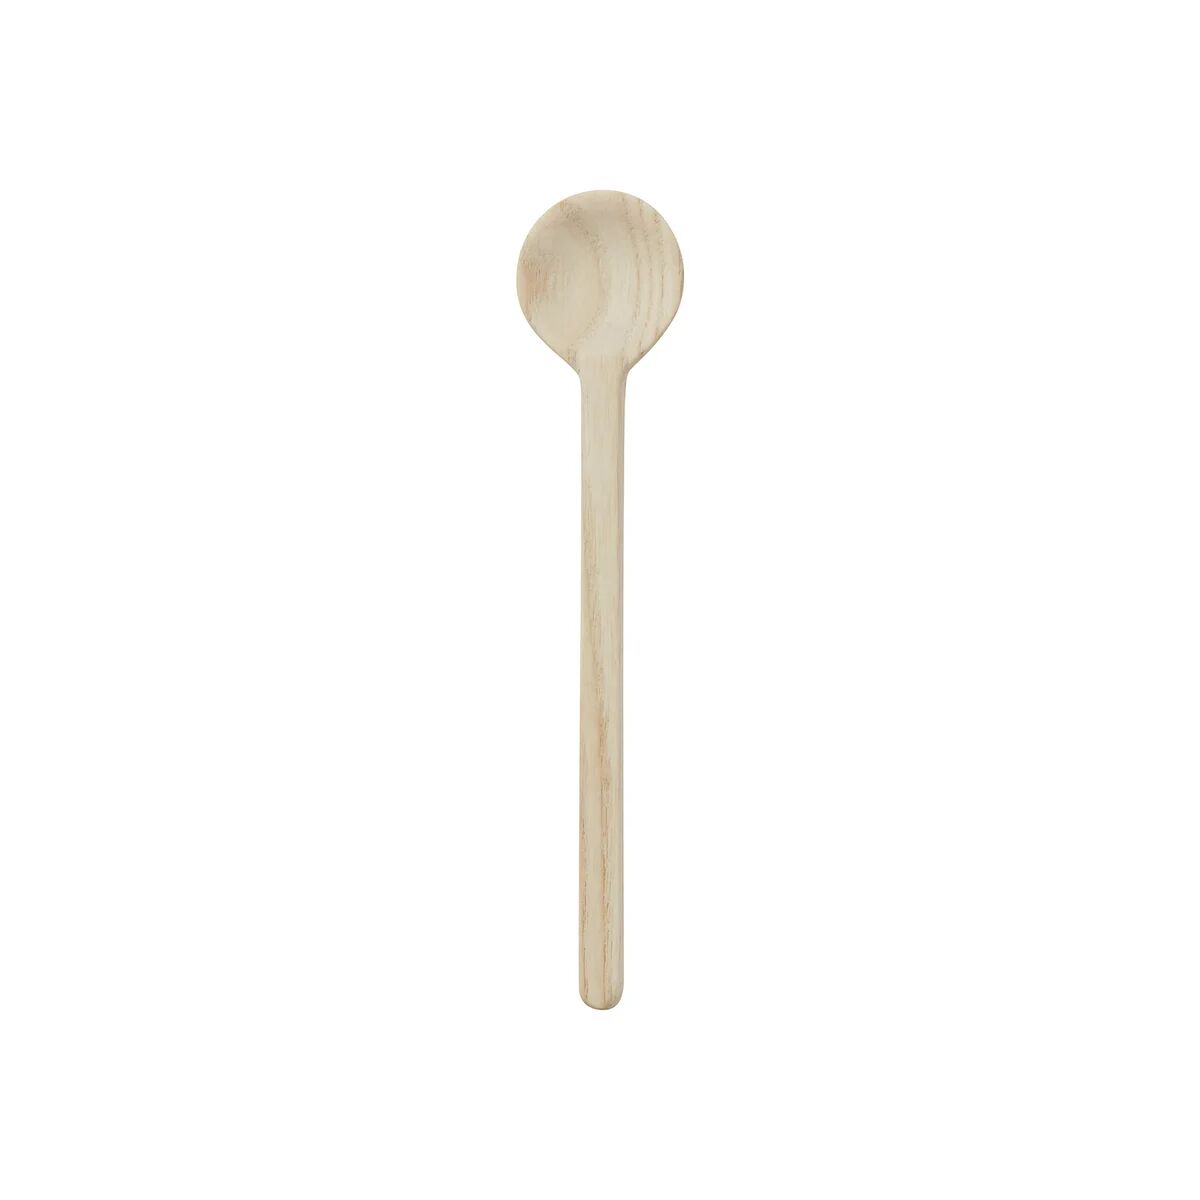 OYOY Yumi Spice Spoon treskje 12 cm Ask